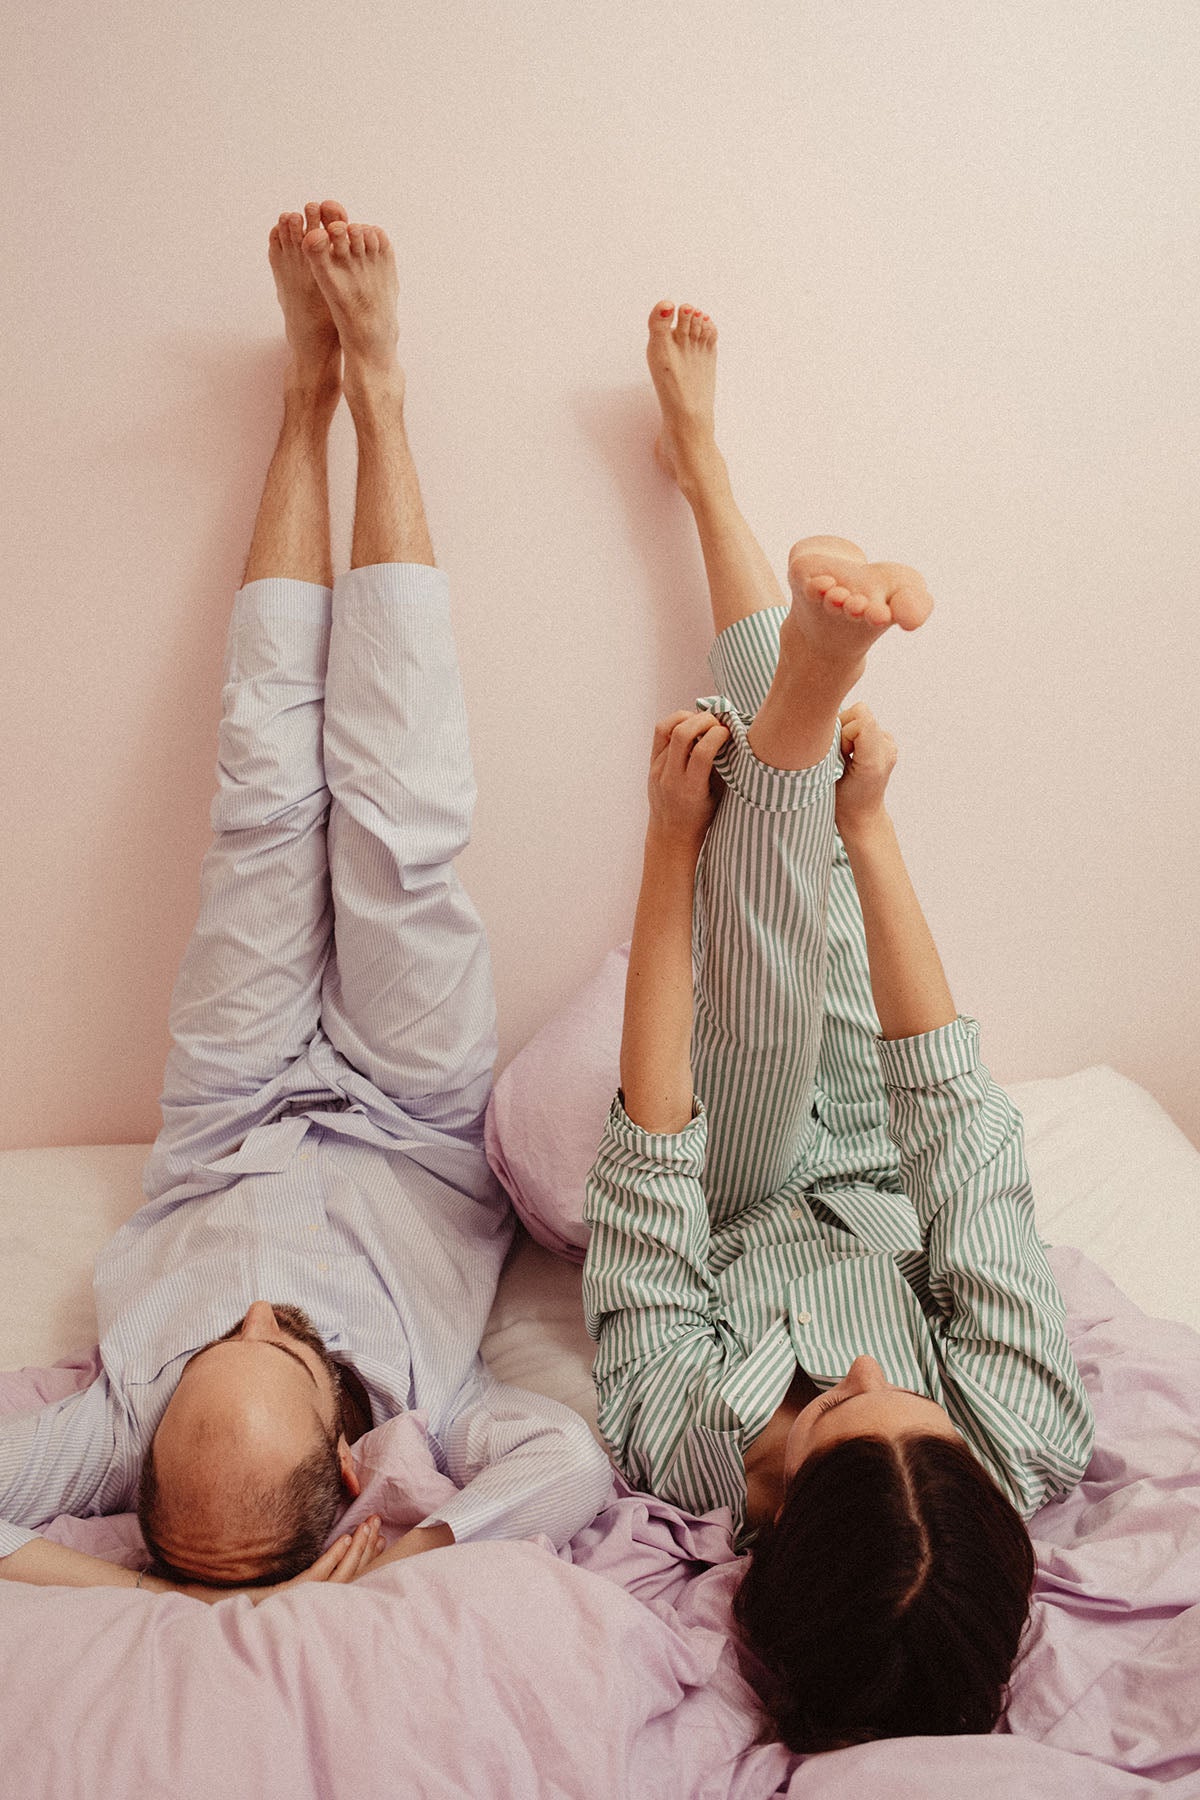 upsidedown_couple in long pyjama sets in bed